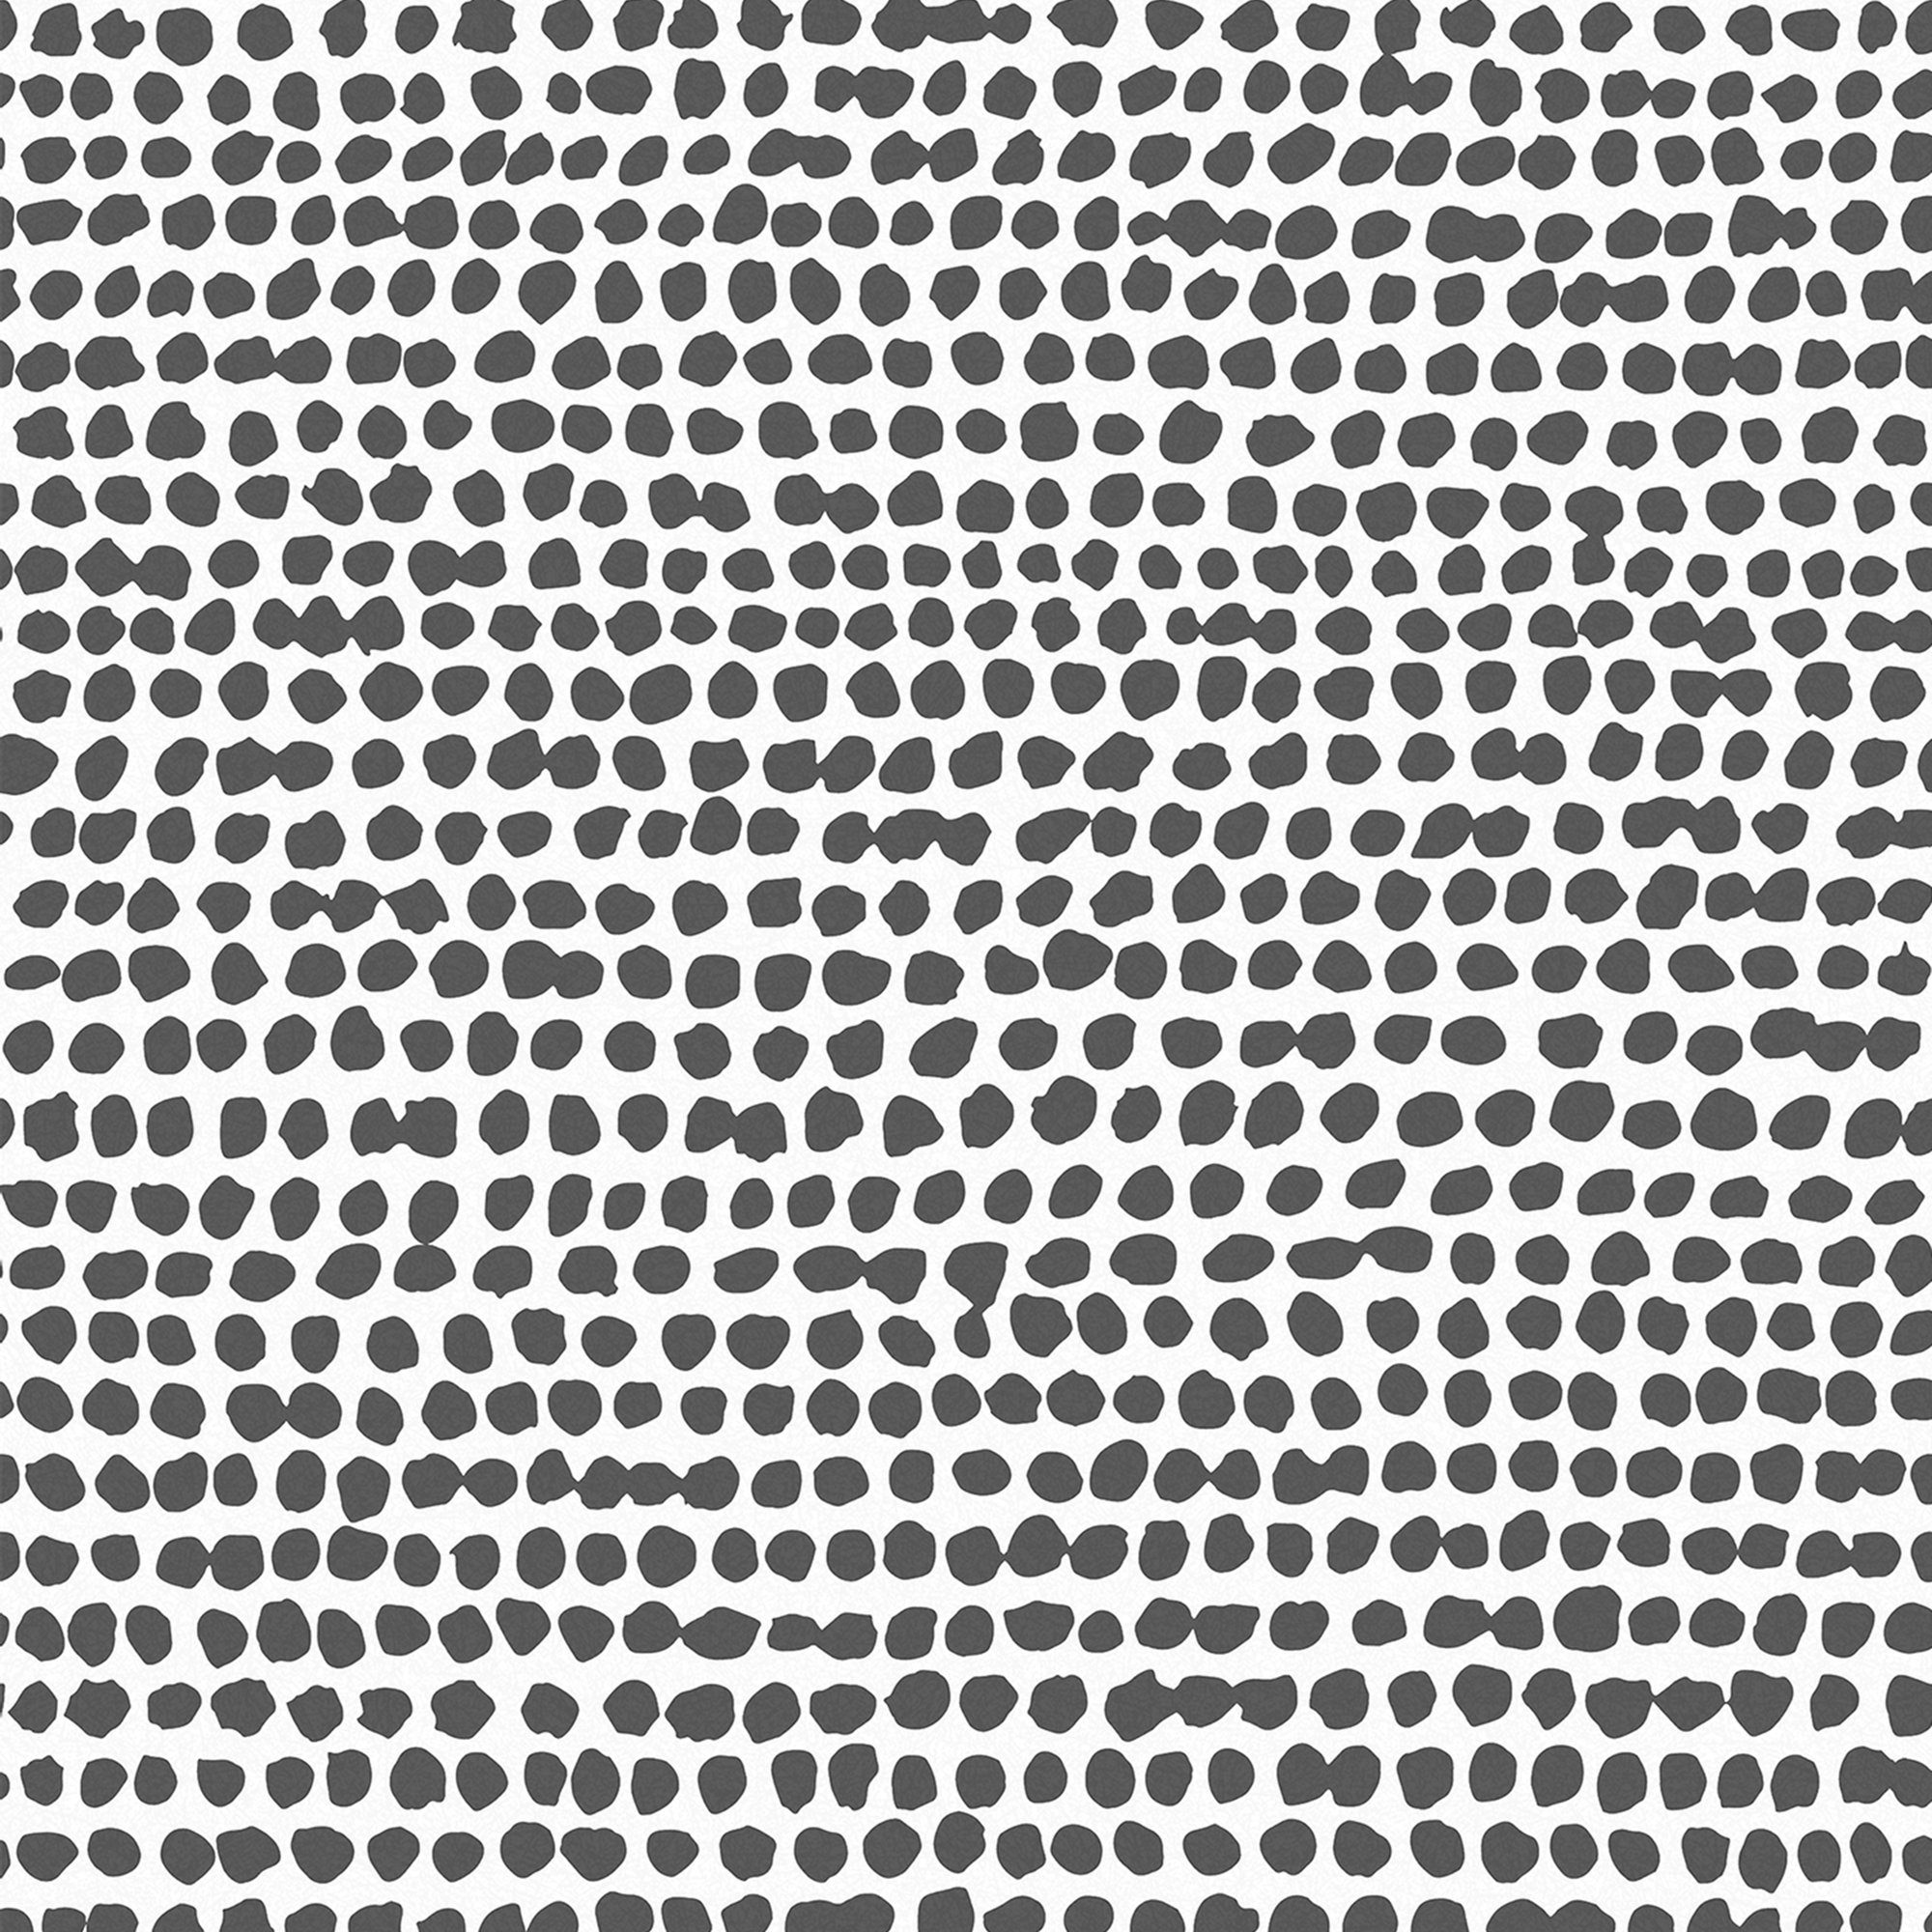 Graham & Brown Polka Dots Wallpaper Double Roll & Reviews